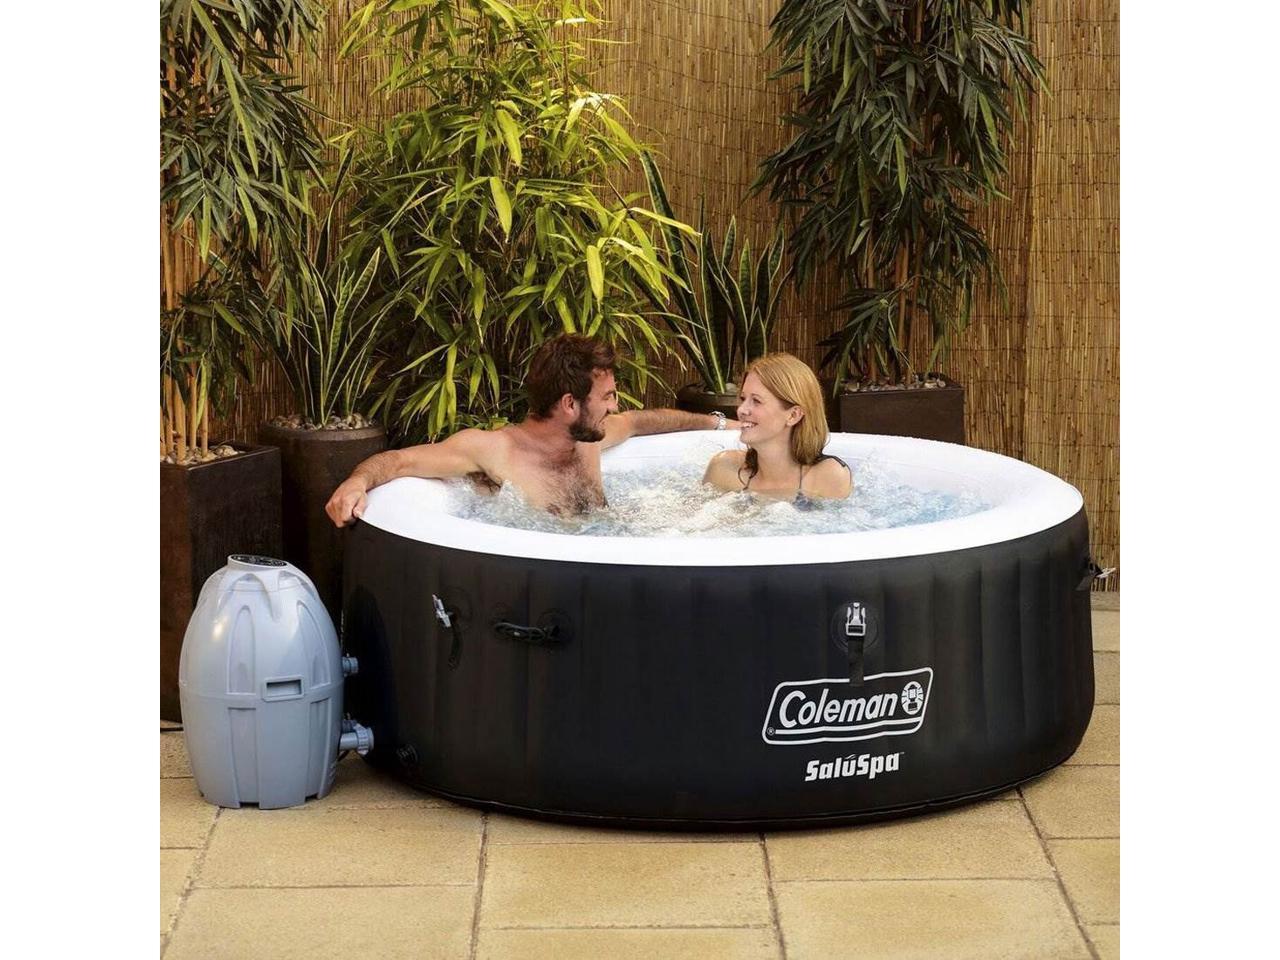 Coleman Saluspa 4 Person Portable Inflatable Outdoor Spa Hot Tub W